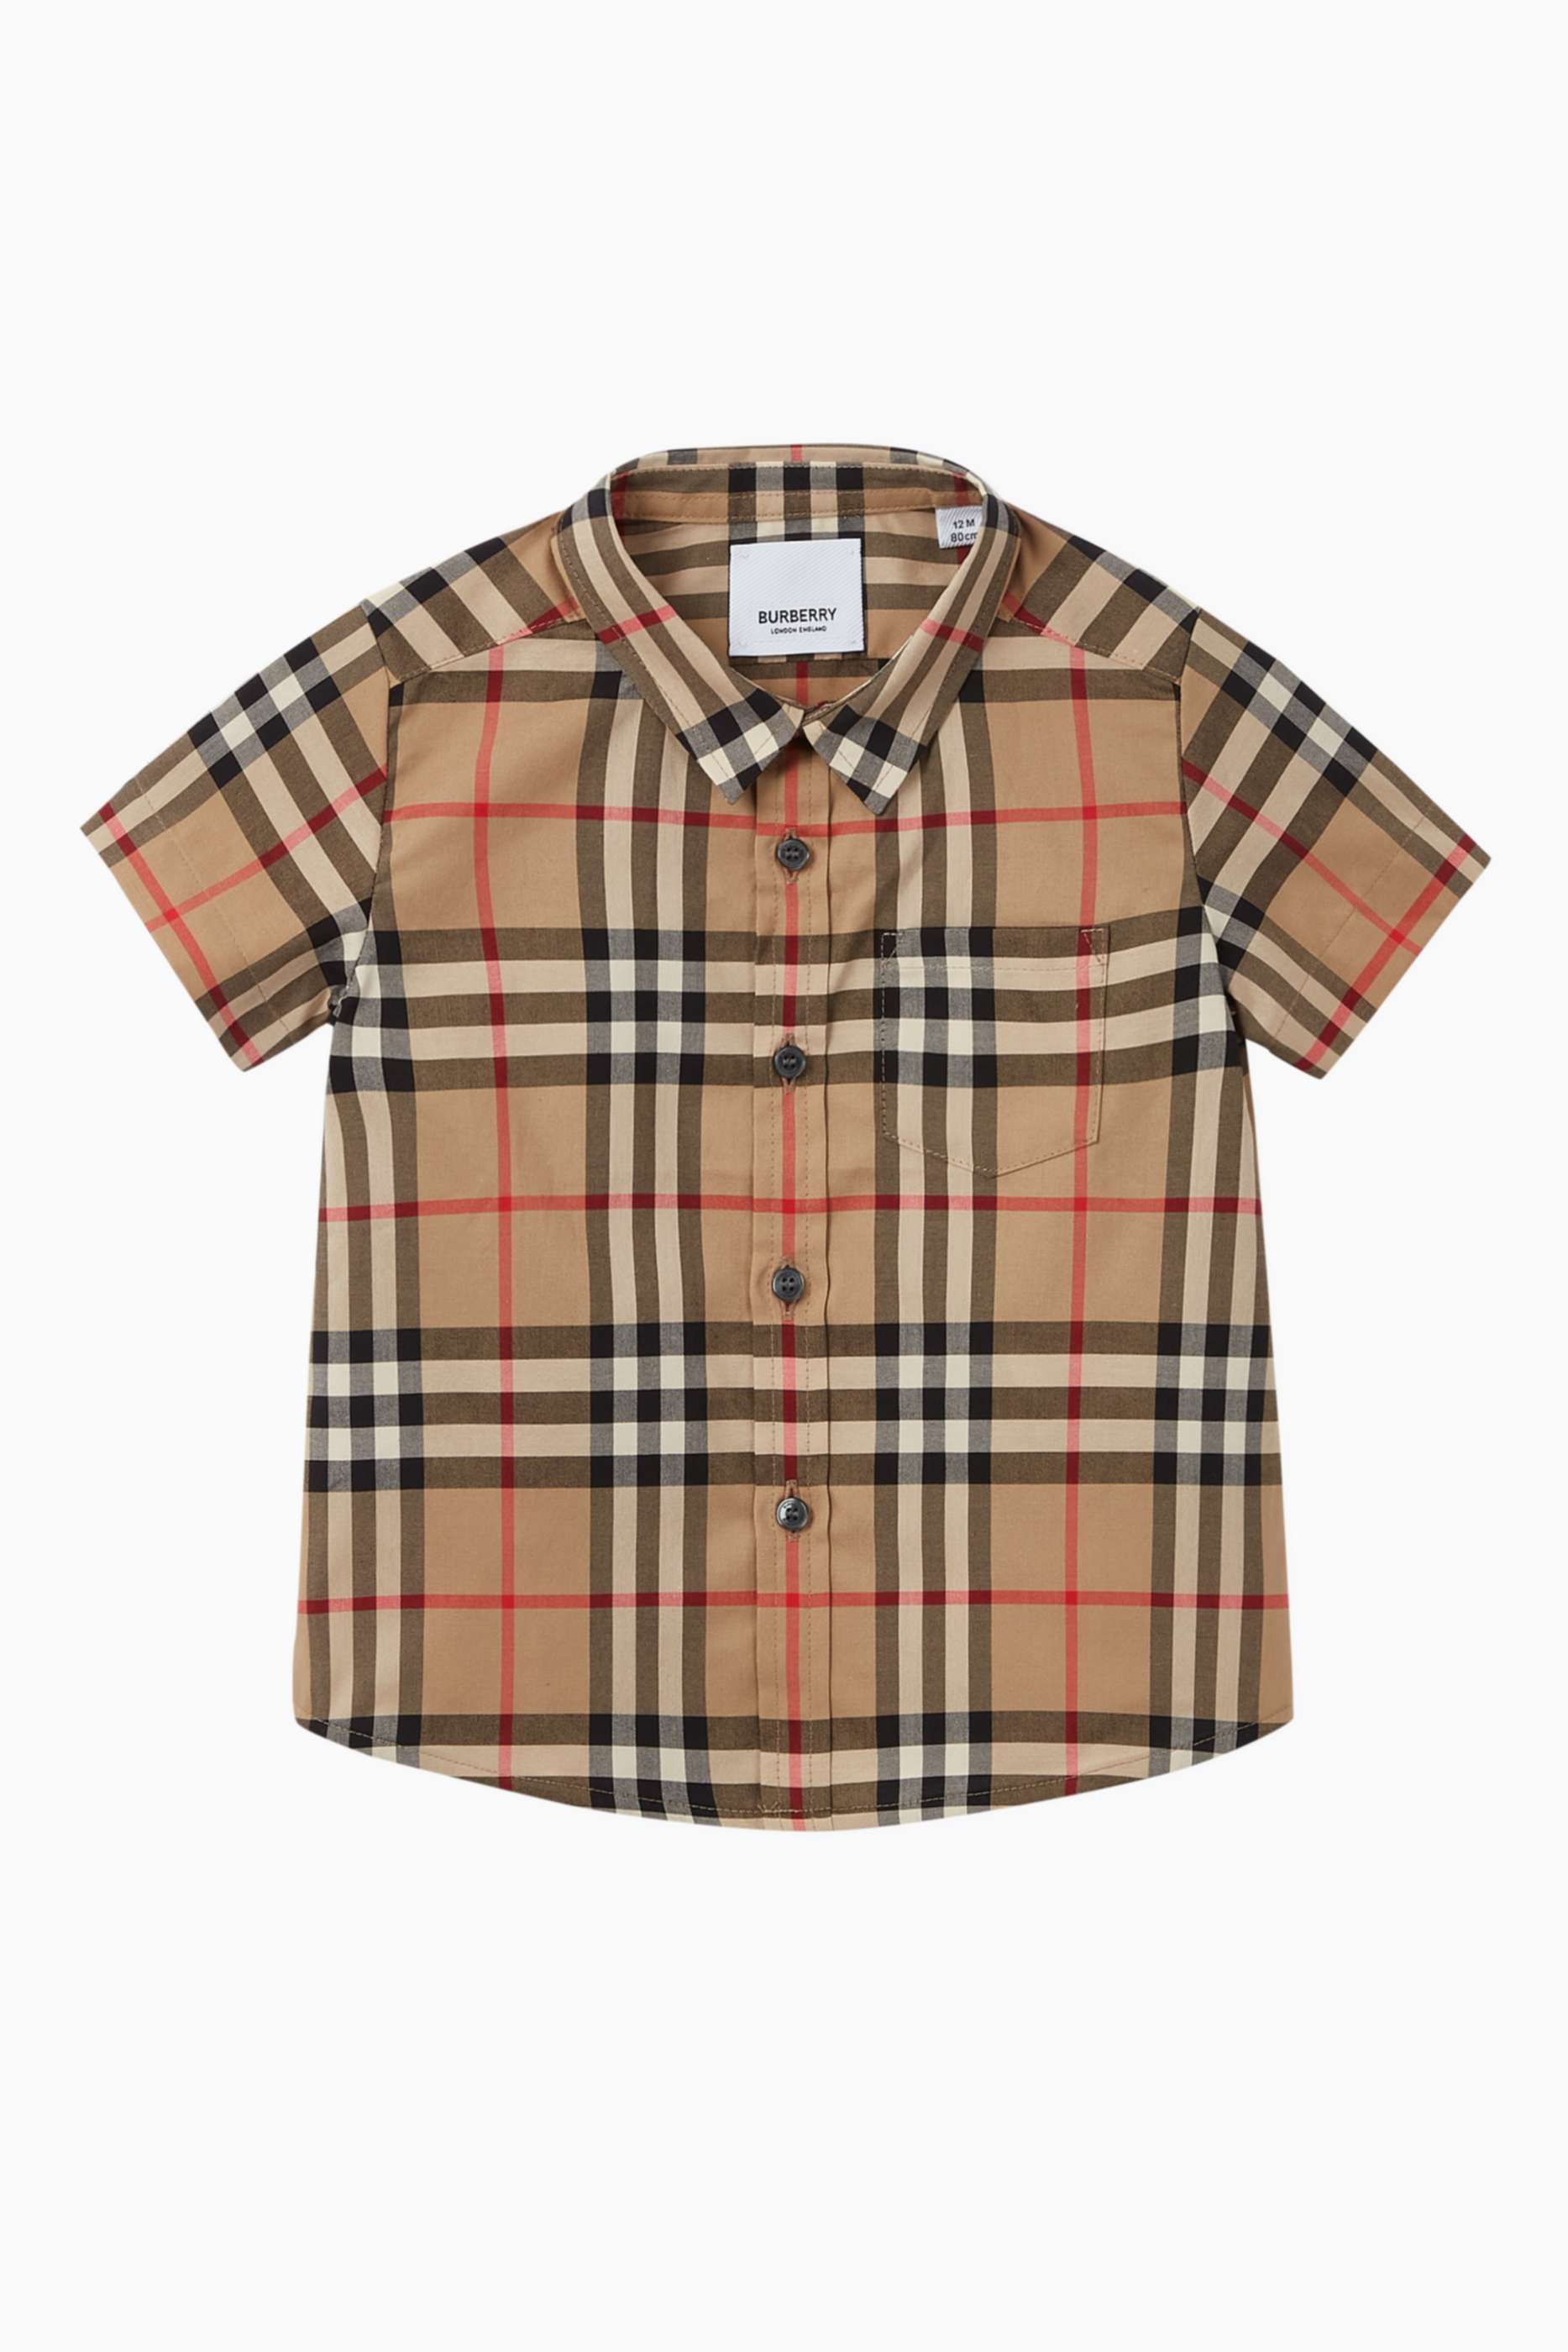 Shop Burberry Neutral Vintage Check Cotton Shirt for Kids | Ounass Kuwait